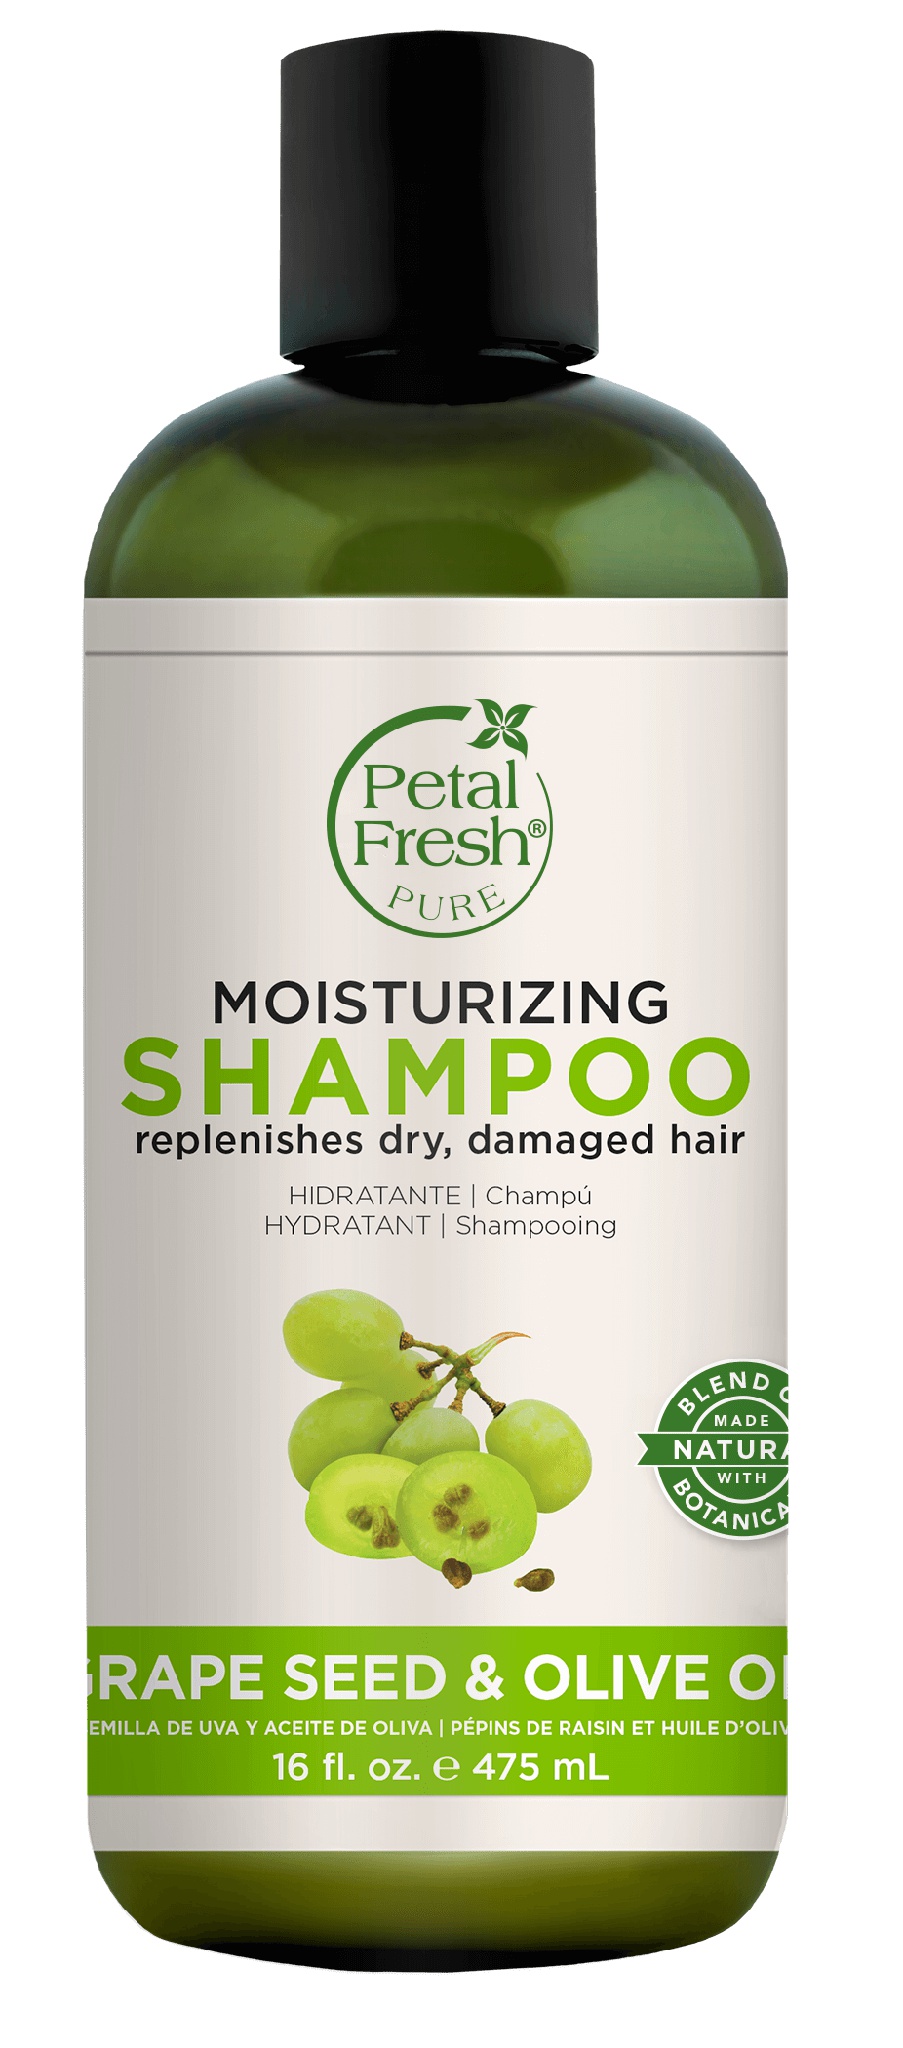 Petal Fresh Grape Seed & Olive Oil Shampoo (Moisturizing)